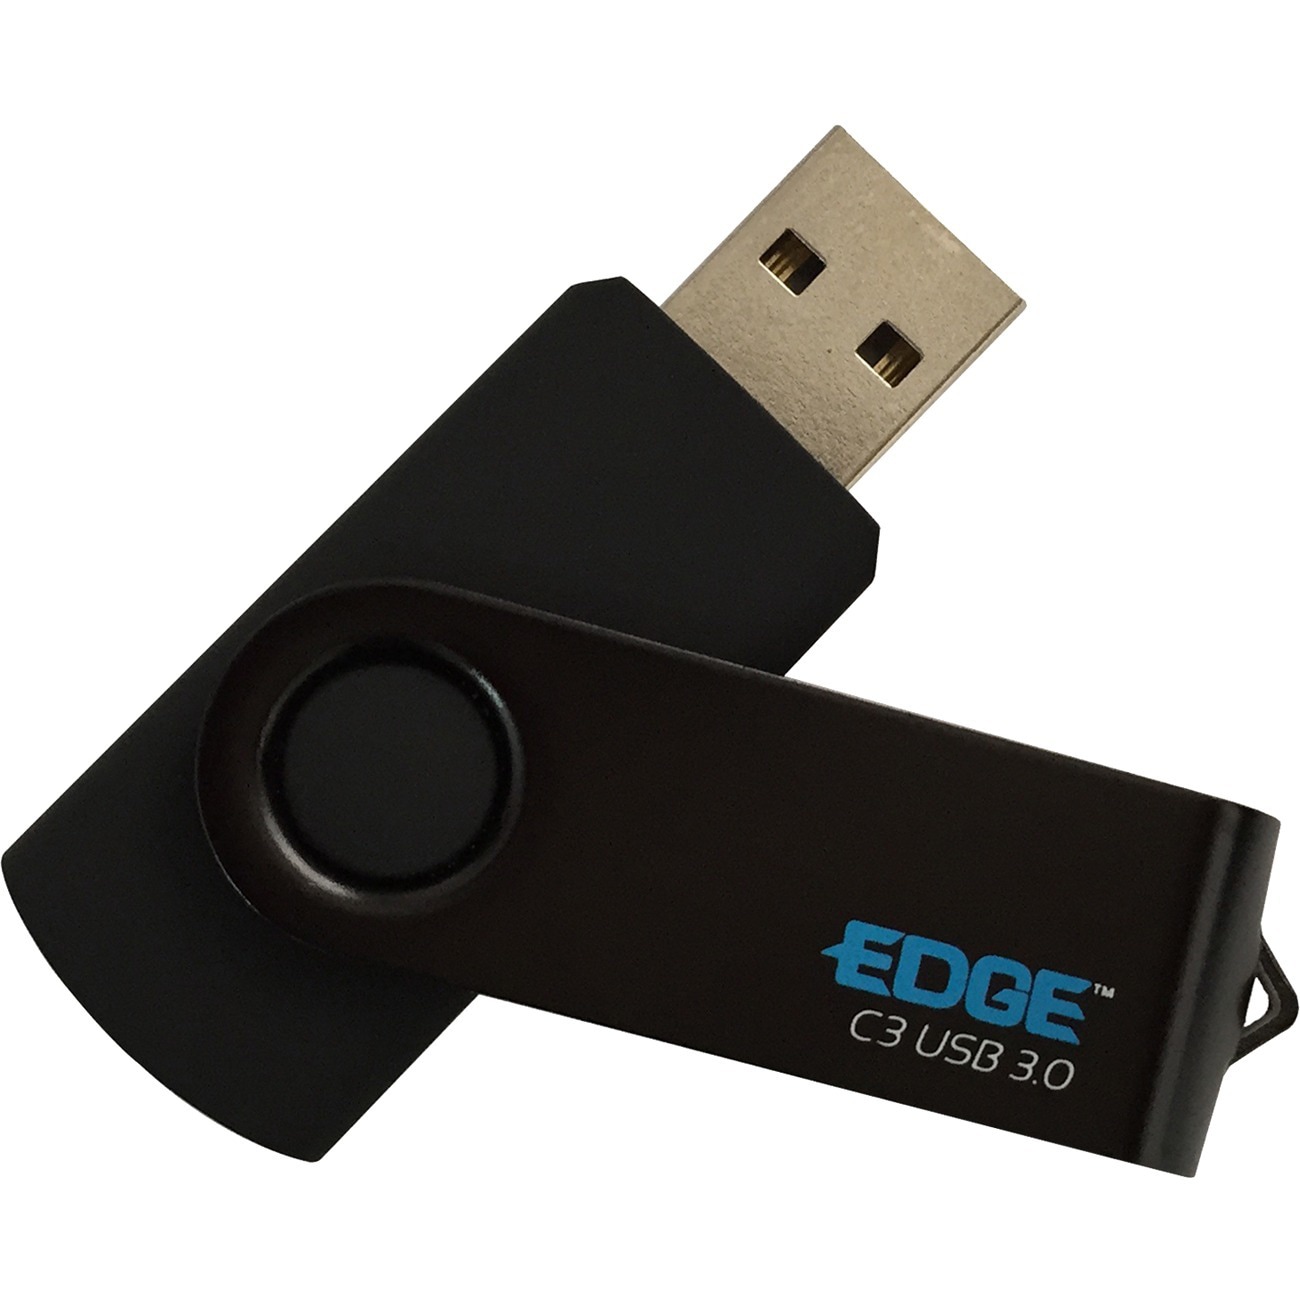 EDGE C3 Flash Drive - PE246952 - -